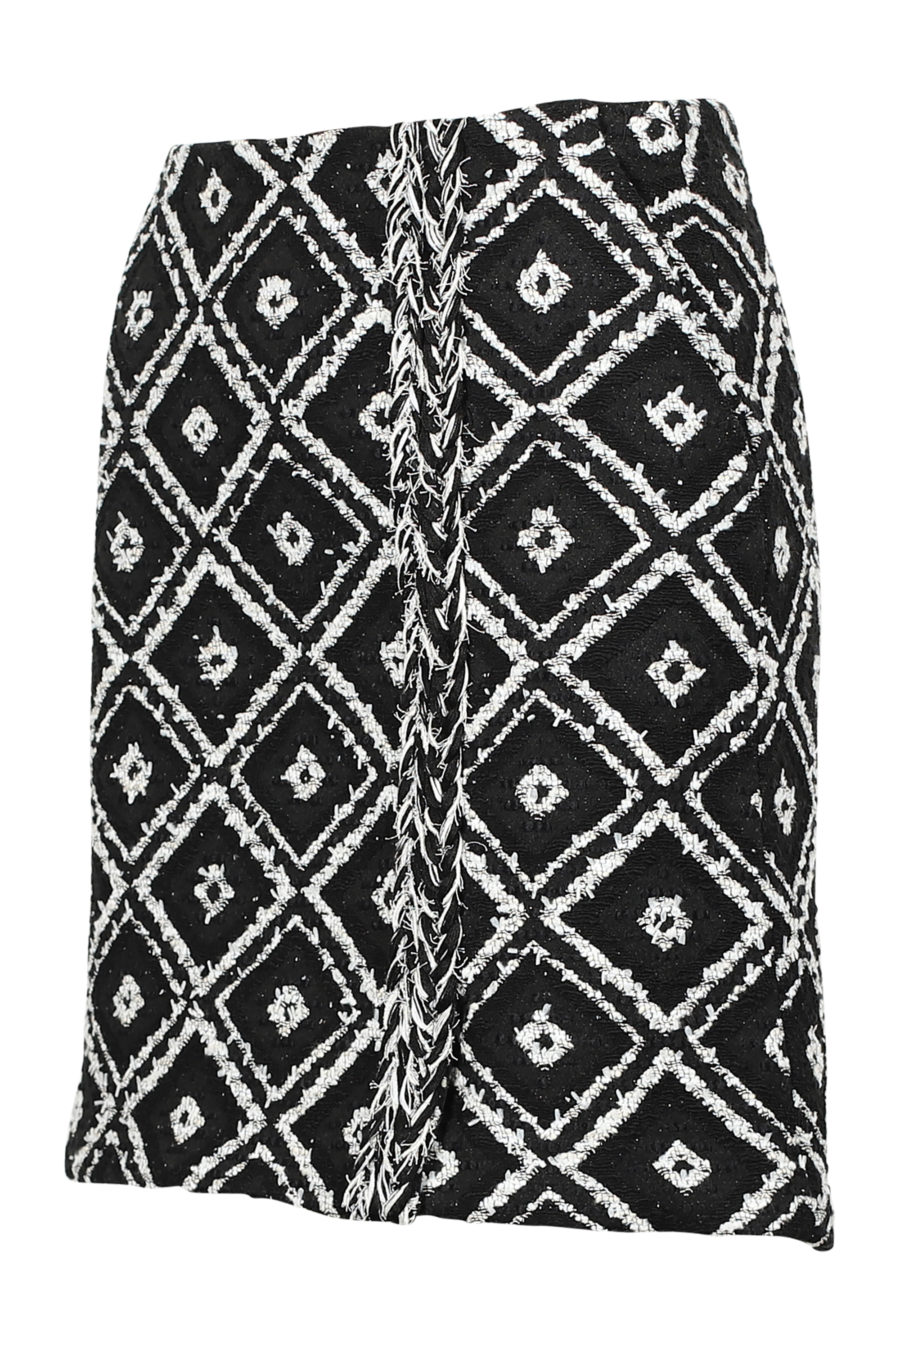 Black and white geometric skirt "Boucle" - IMG 3179